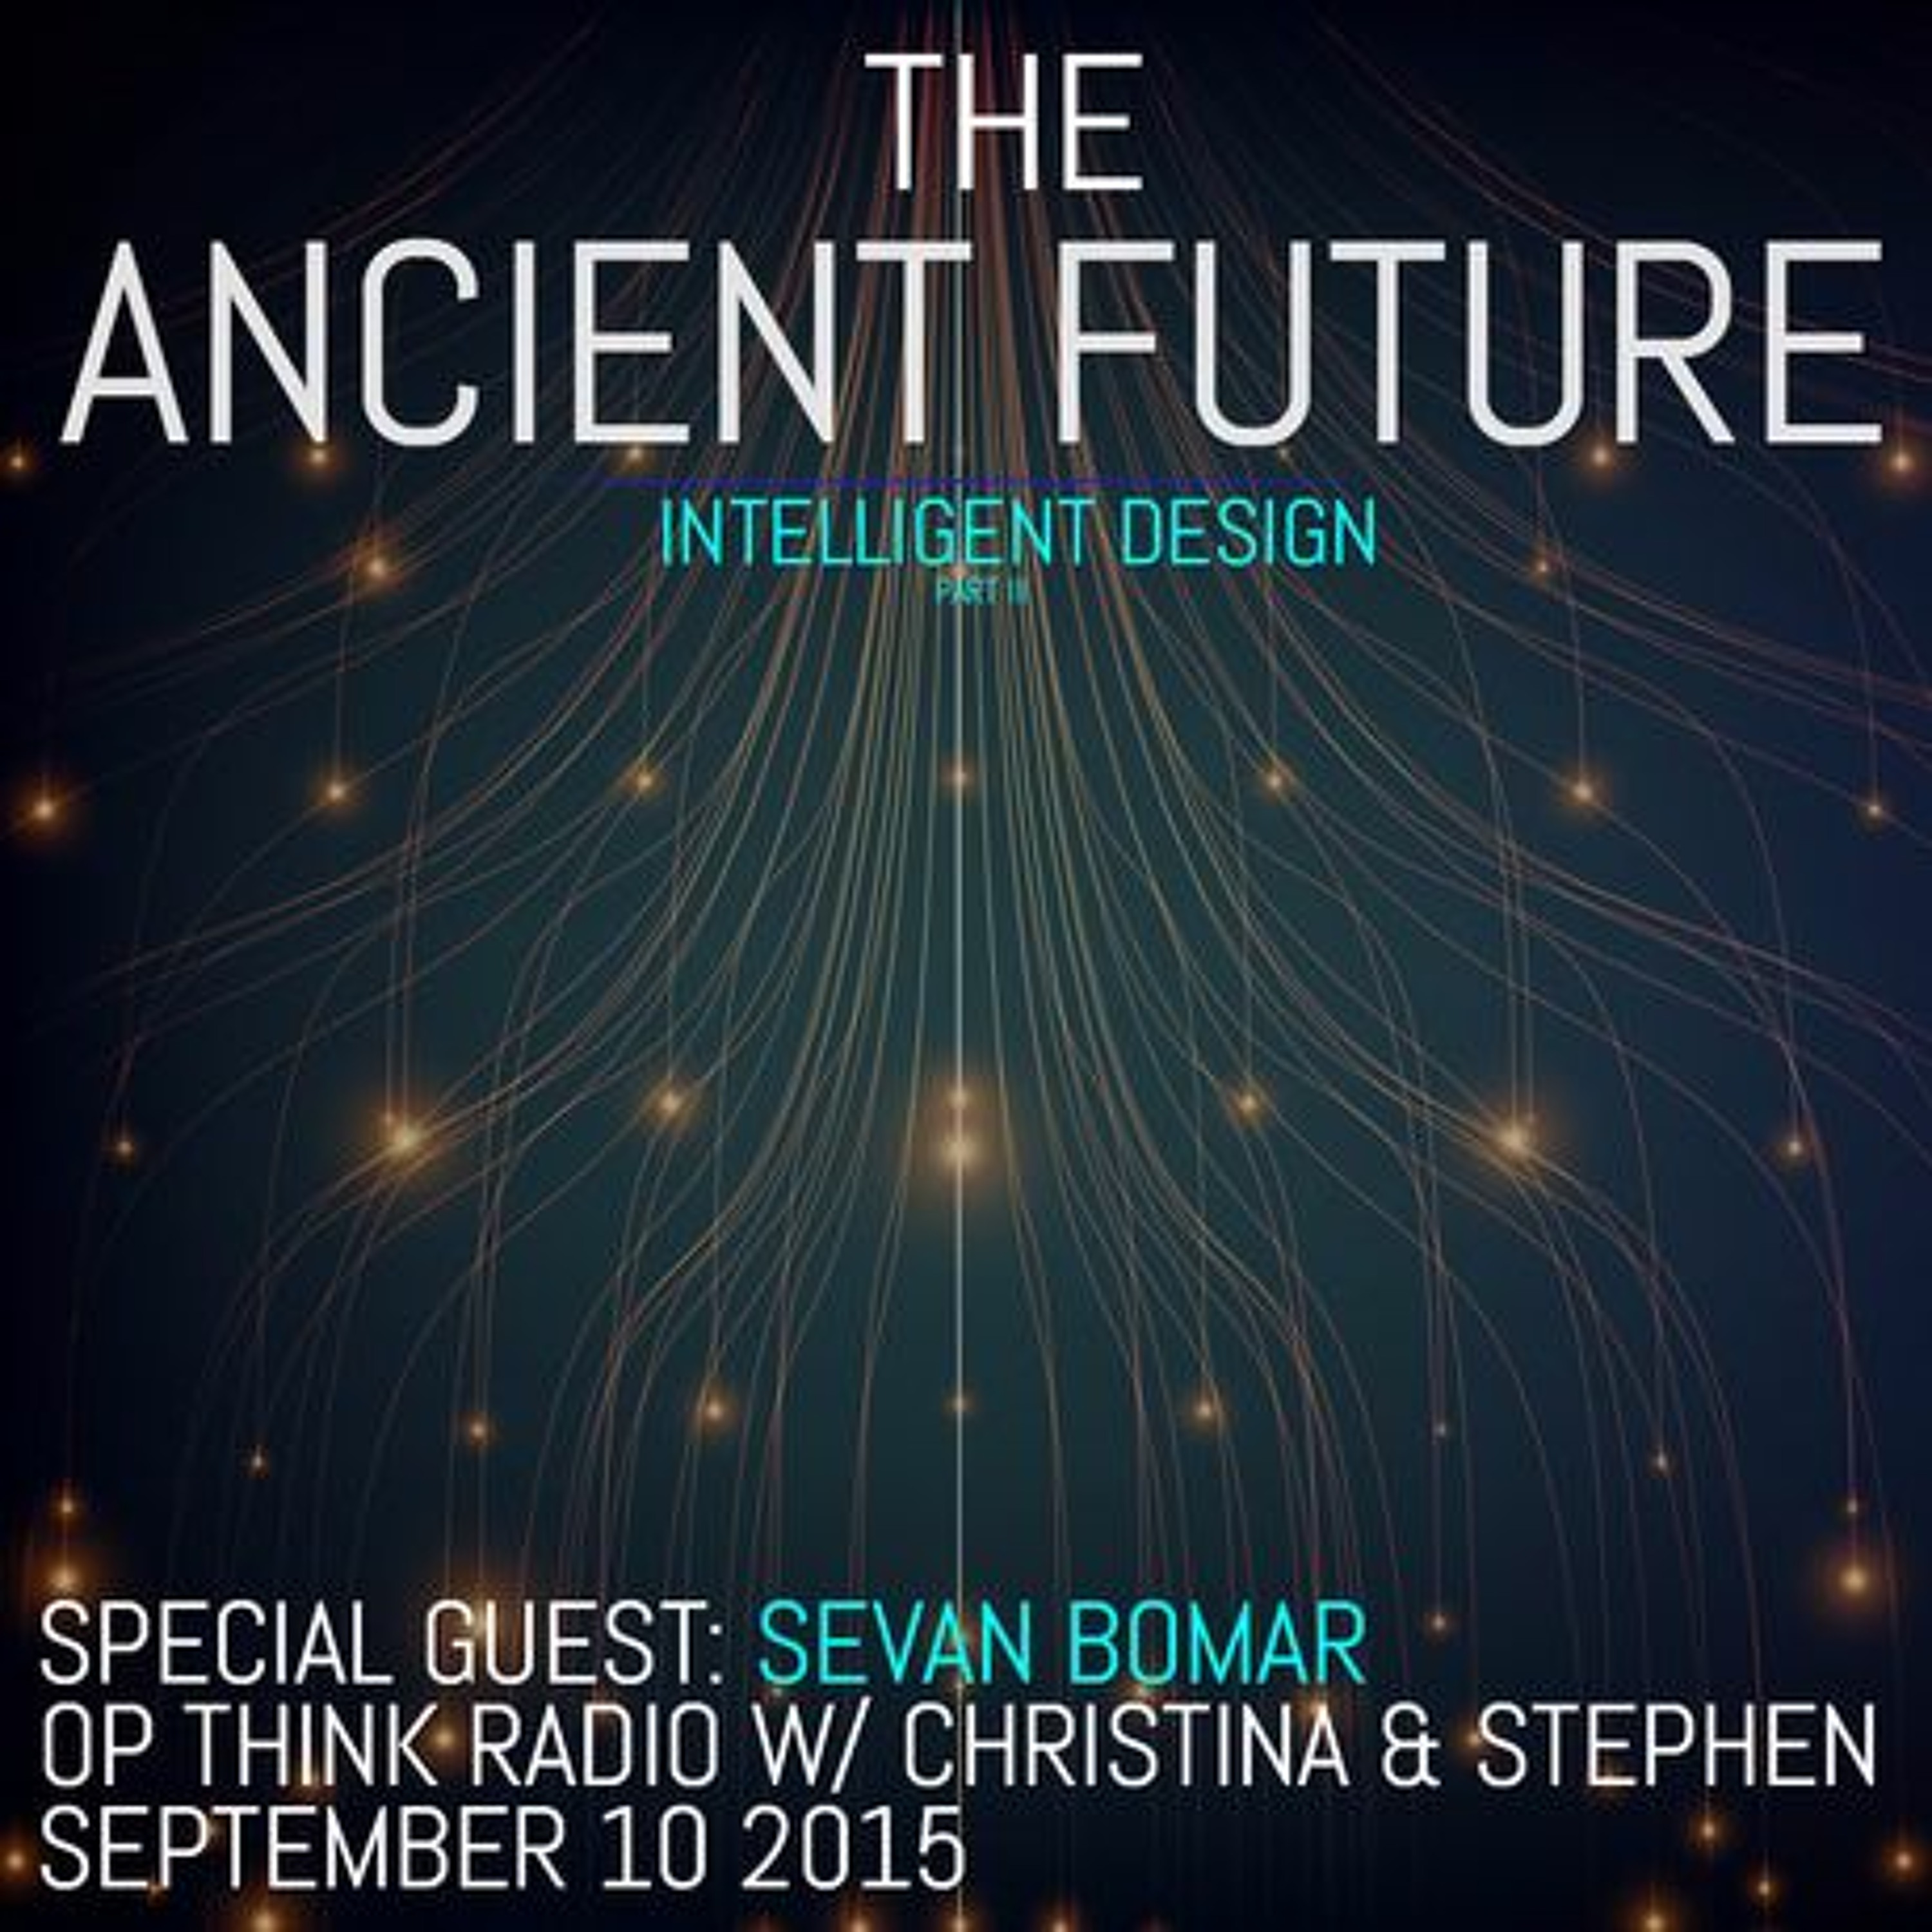 SEVAN BOMAR - THE ANCIENT FUTURE PART 3, INTELLIGENT DESIGN - OPTHINK RADIO - SEPT 10 2015